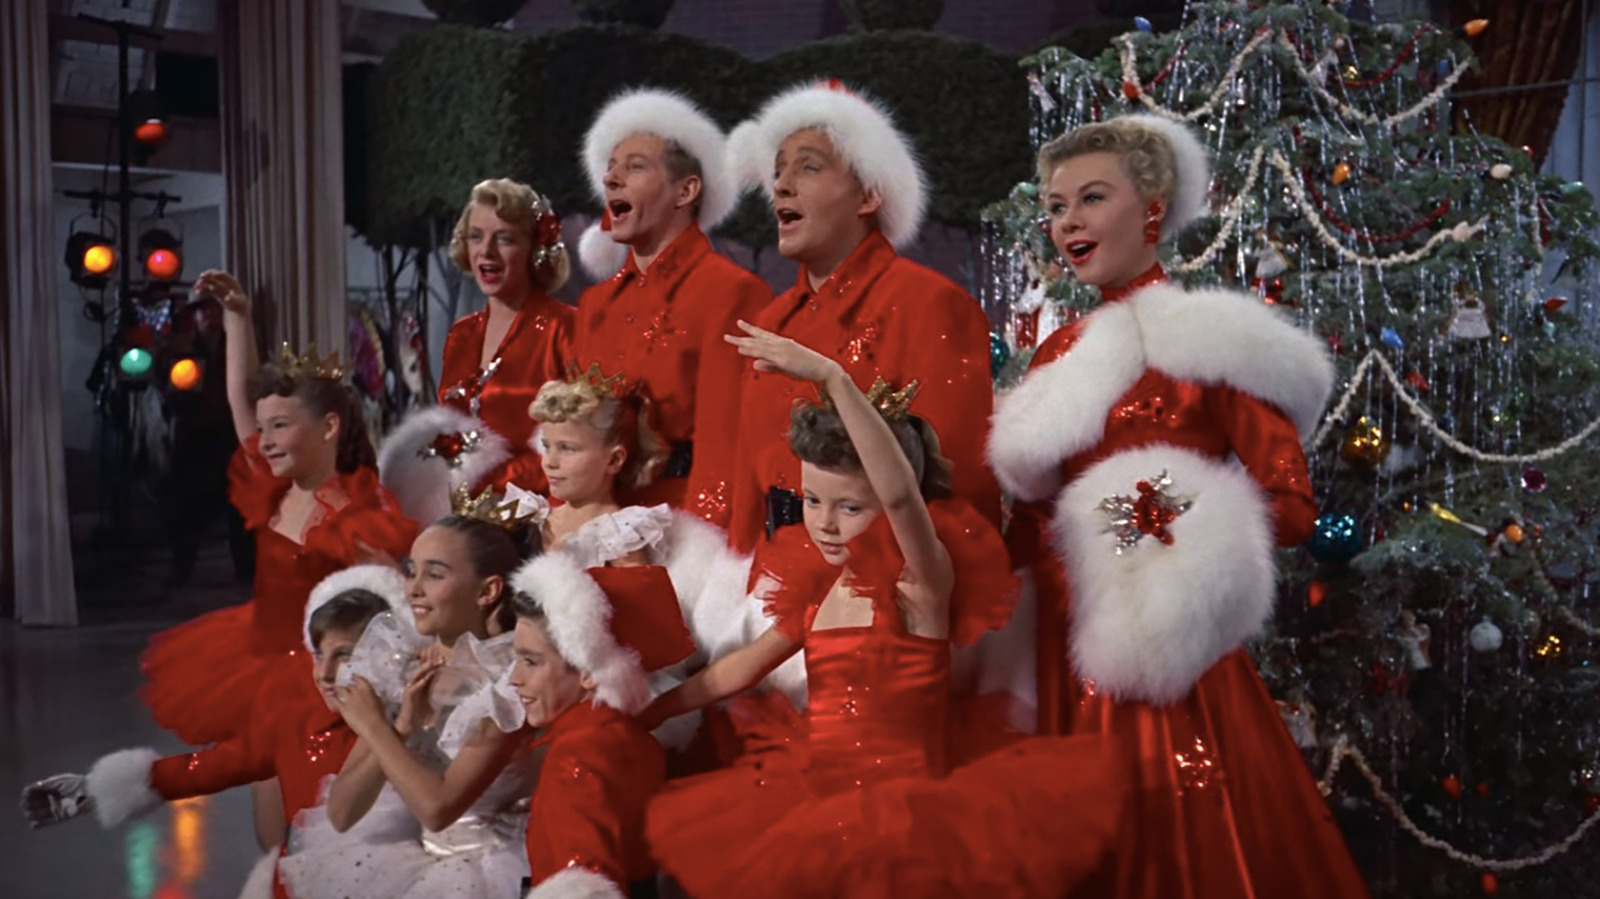 Musical Santas - Dreaming of a White Christmas